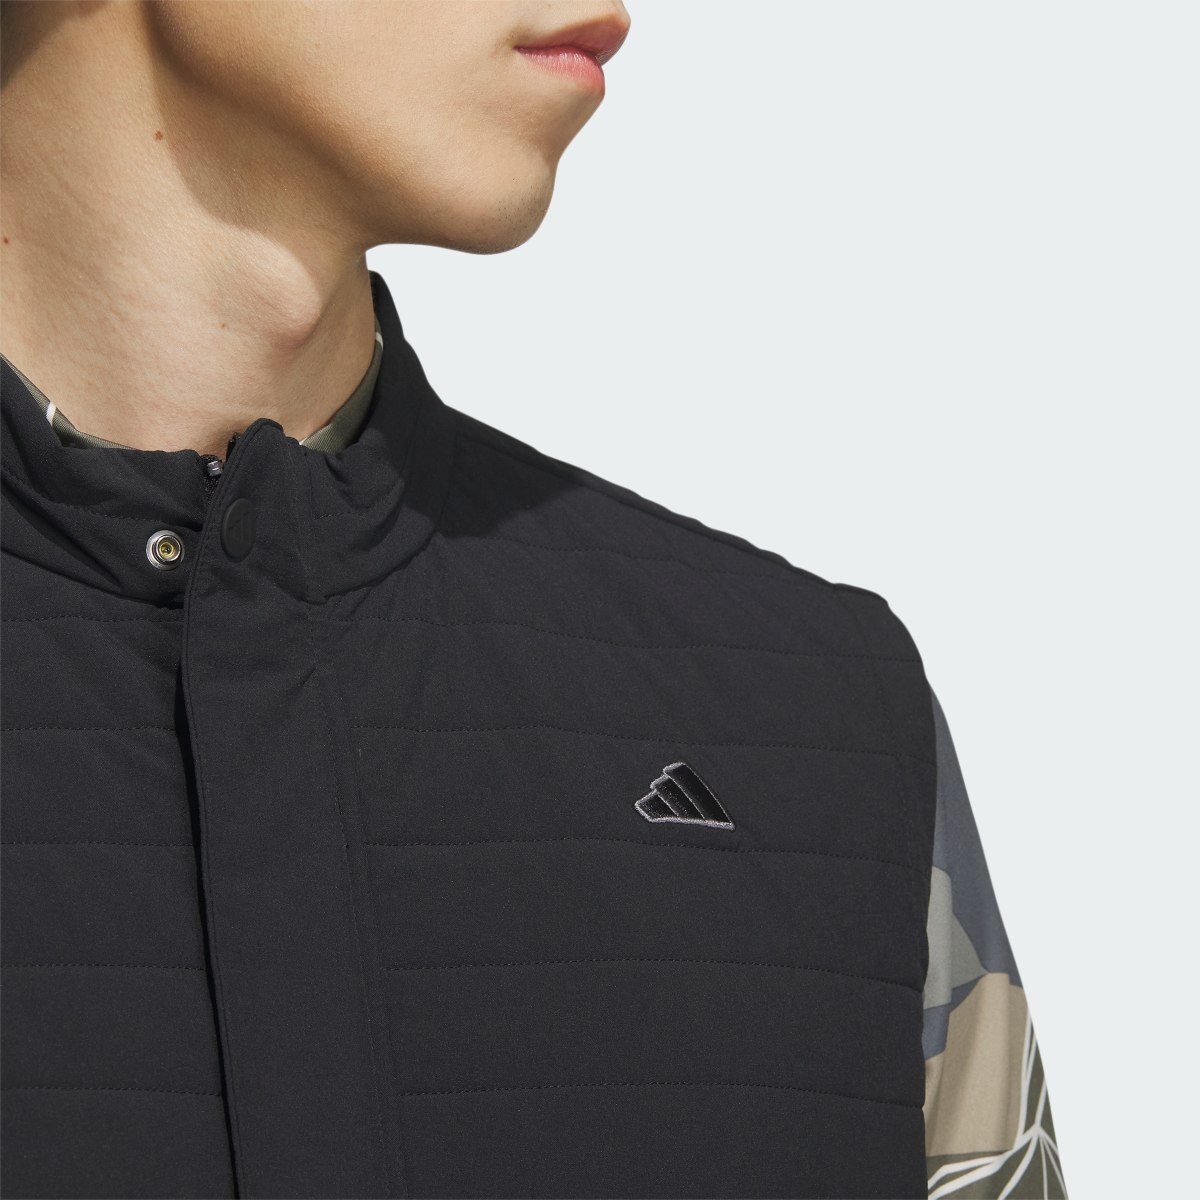 Adidas Go-To Insulation Vest. 7